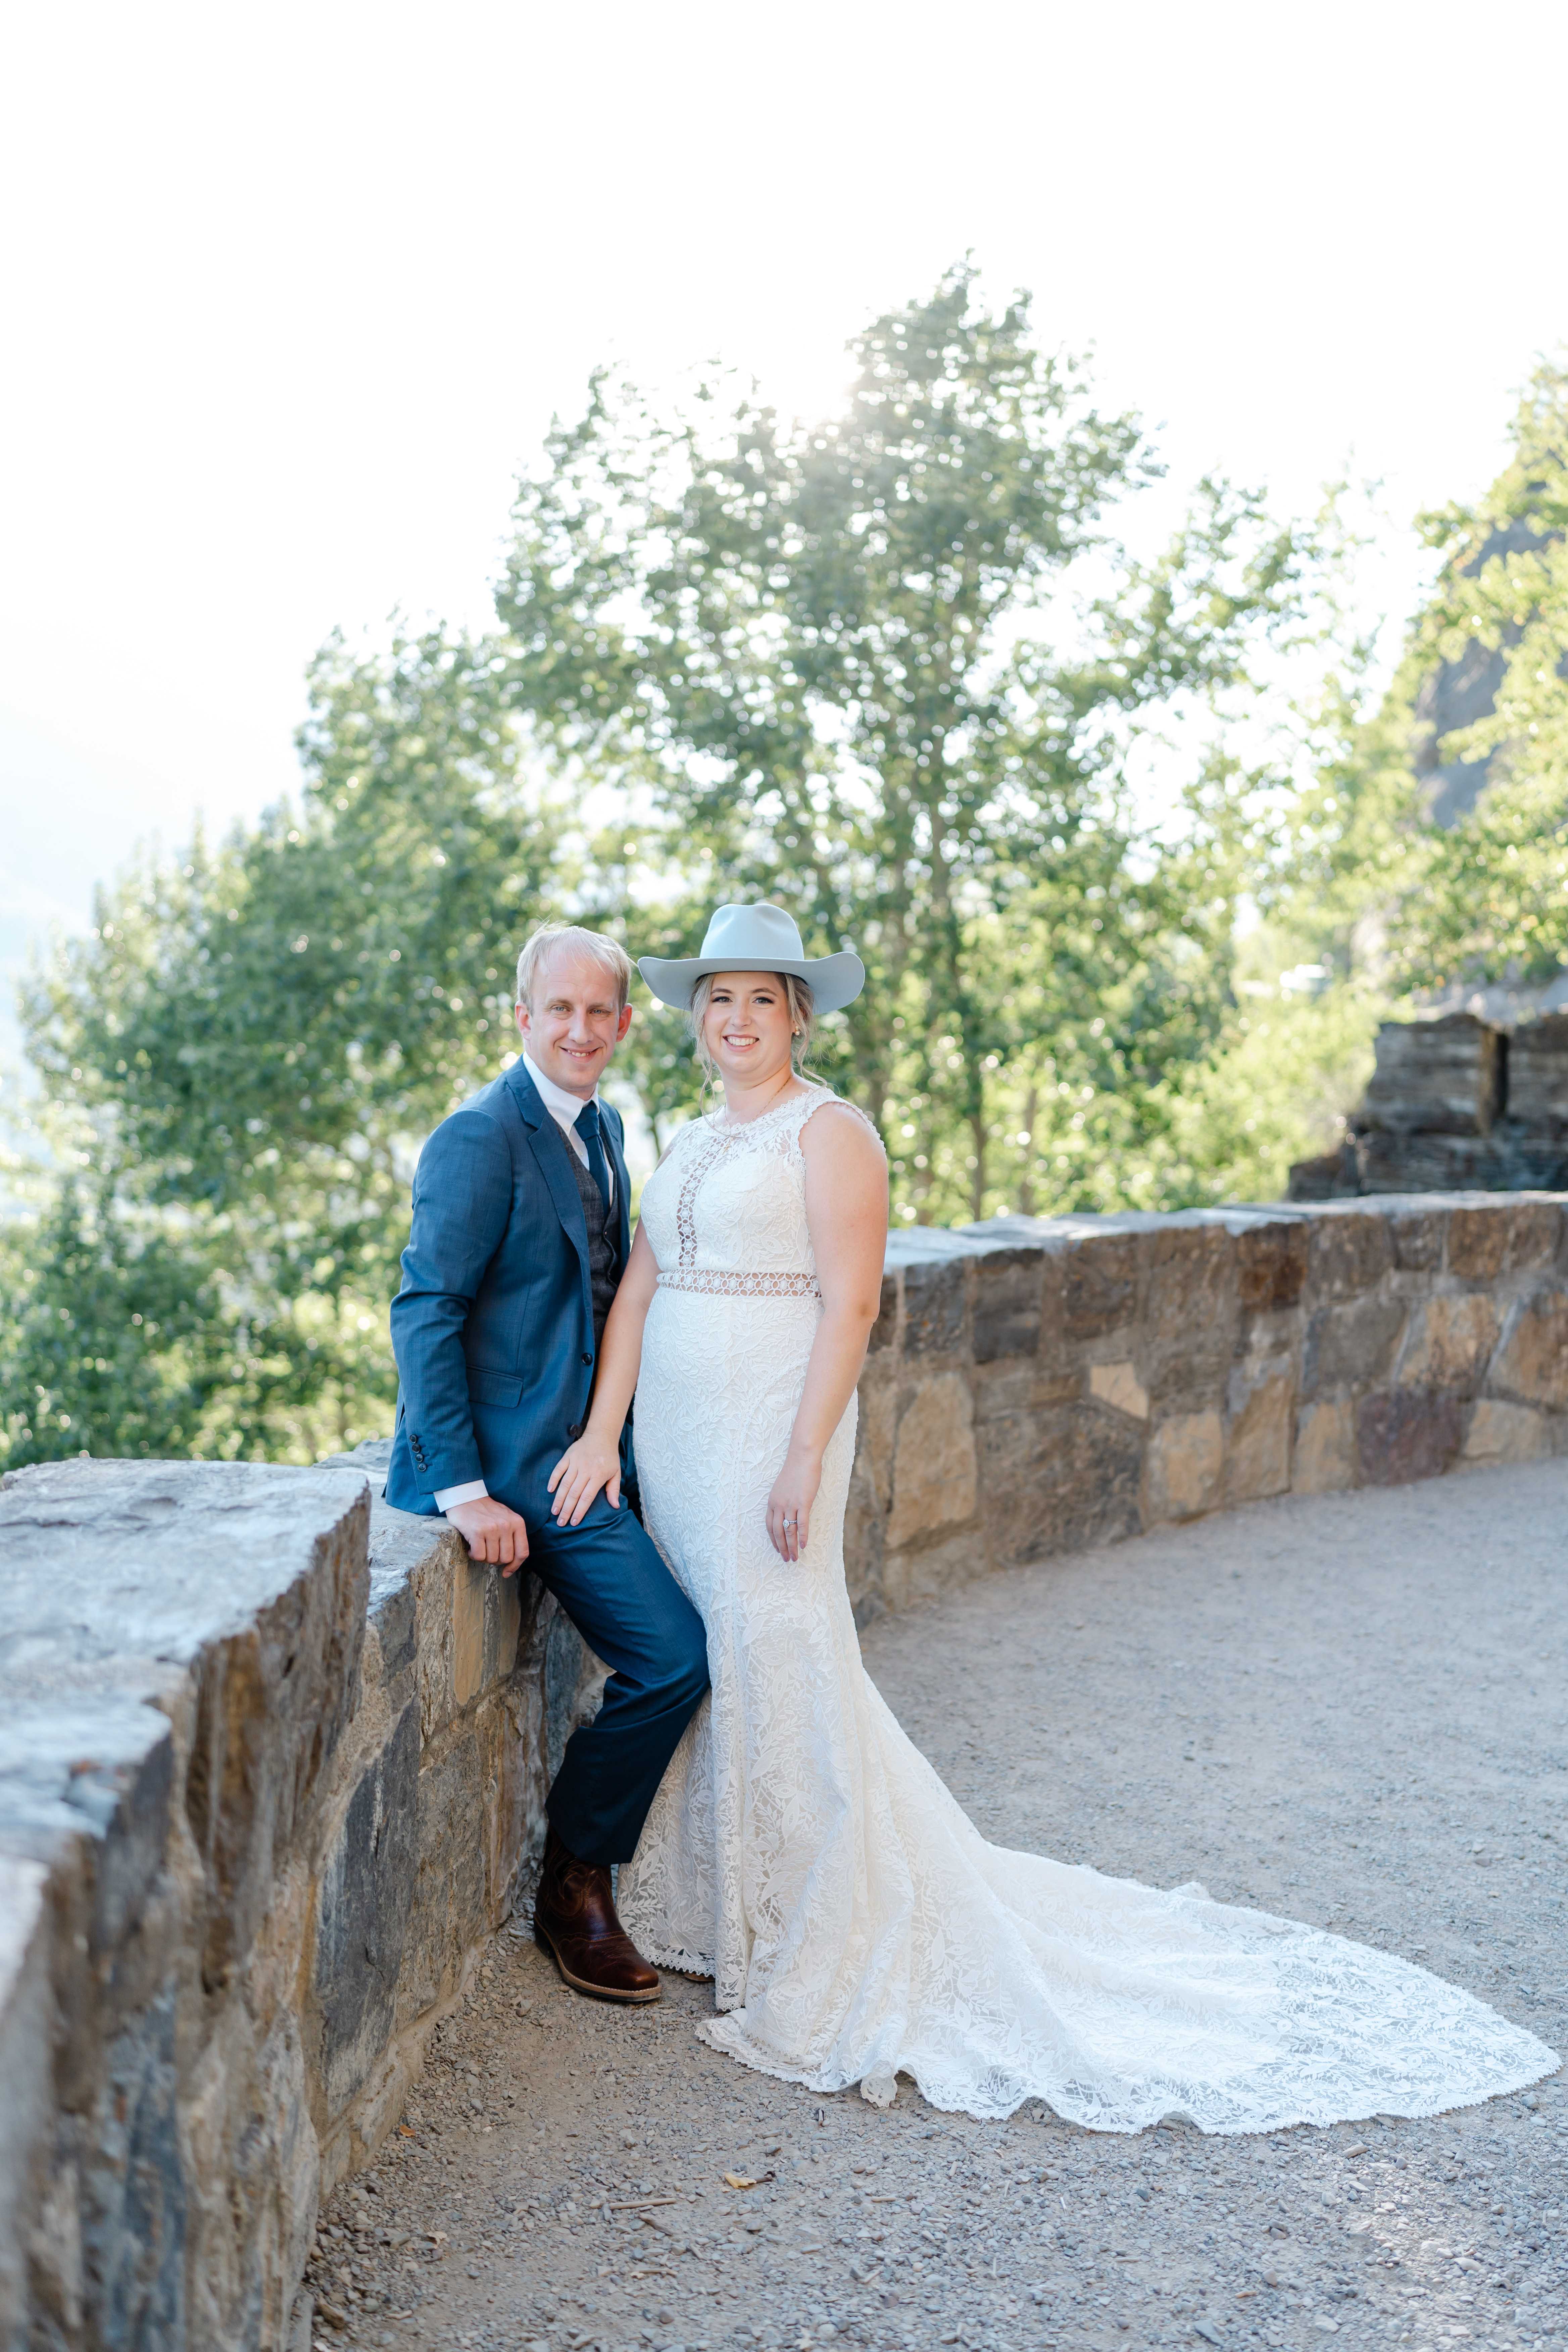 Elegant Bohemian Wedding At Glacier National Park | Mountainside Bride